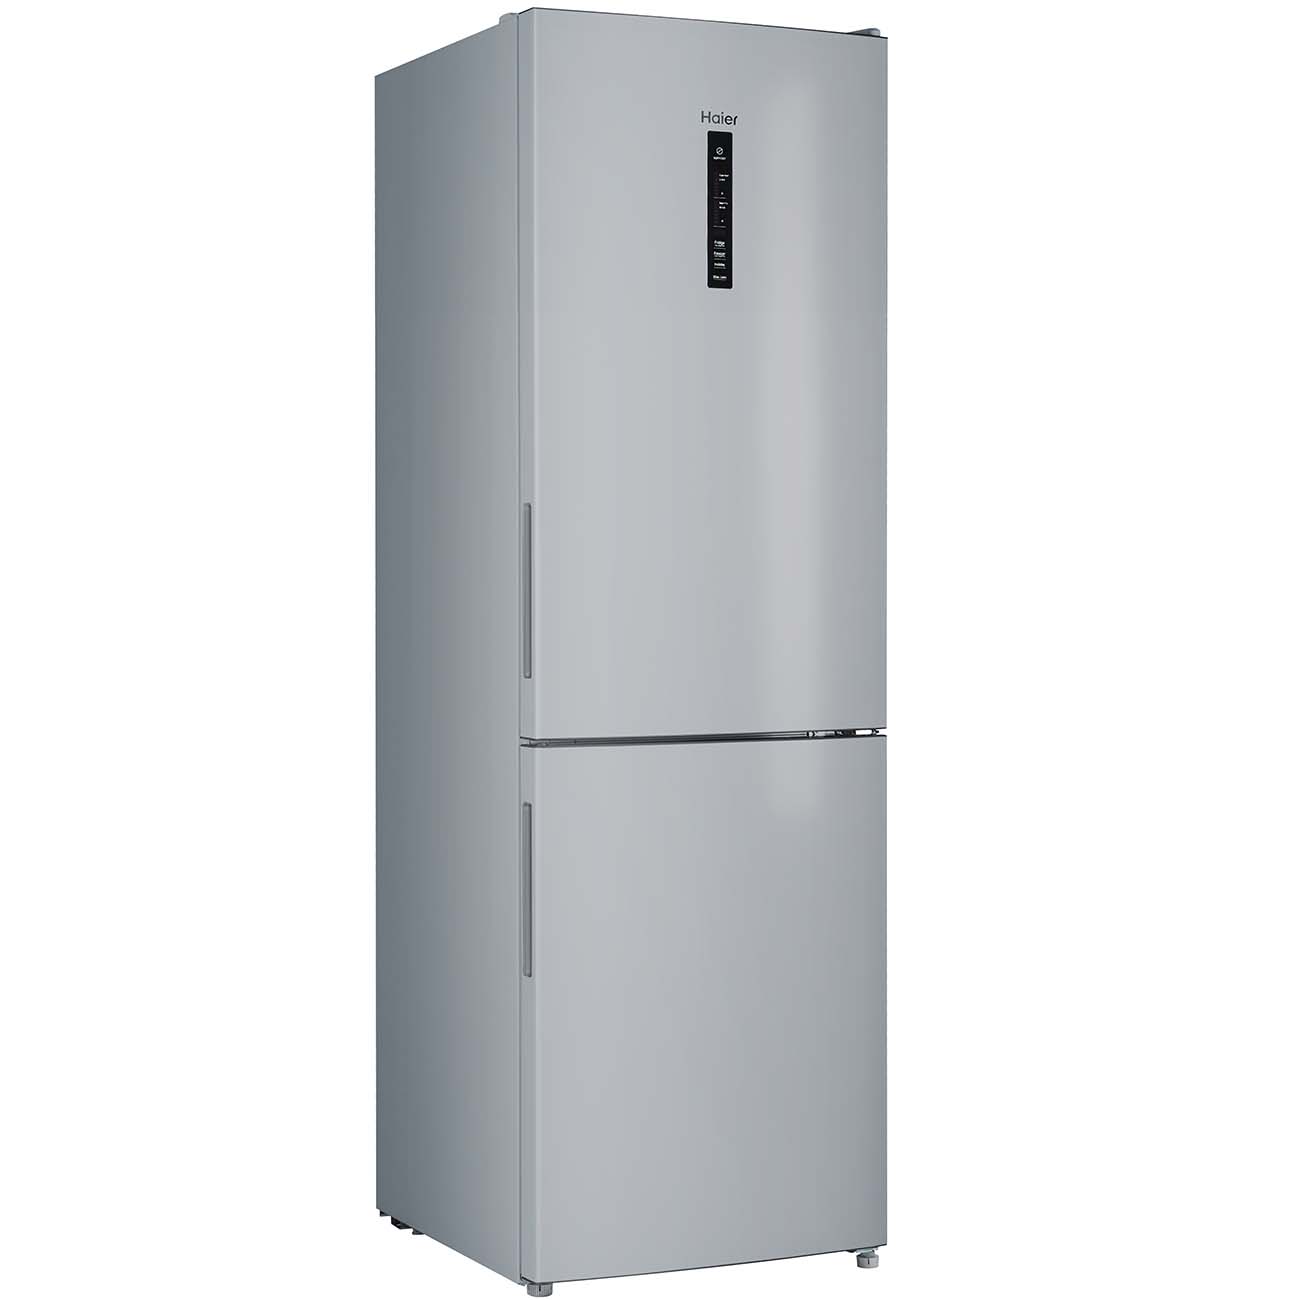 Холодильник хайер производитель. Haier cef535asg. Холодильник Haier cef535asg. Холодильник Haier cef537asg. Холодильник Хайер 535.